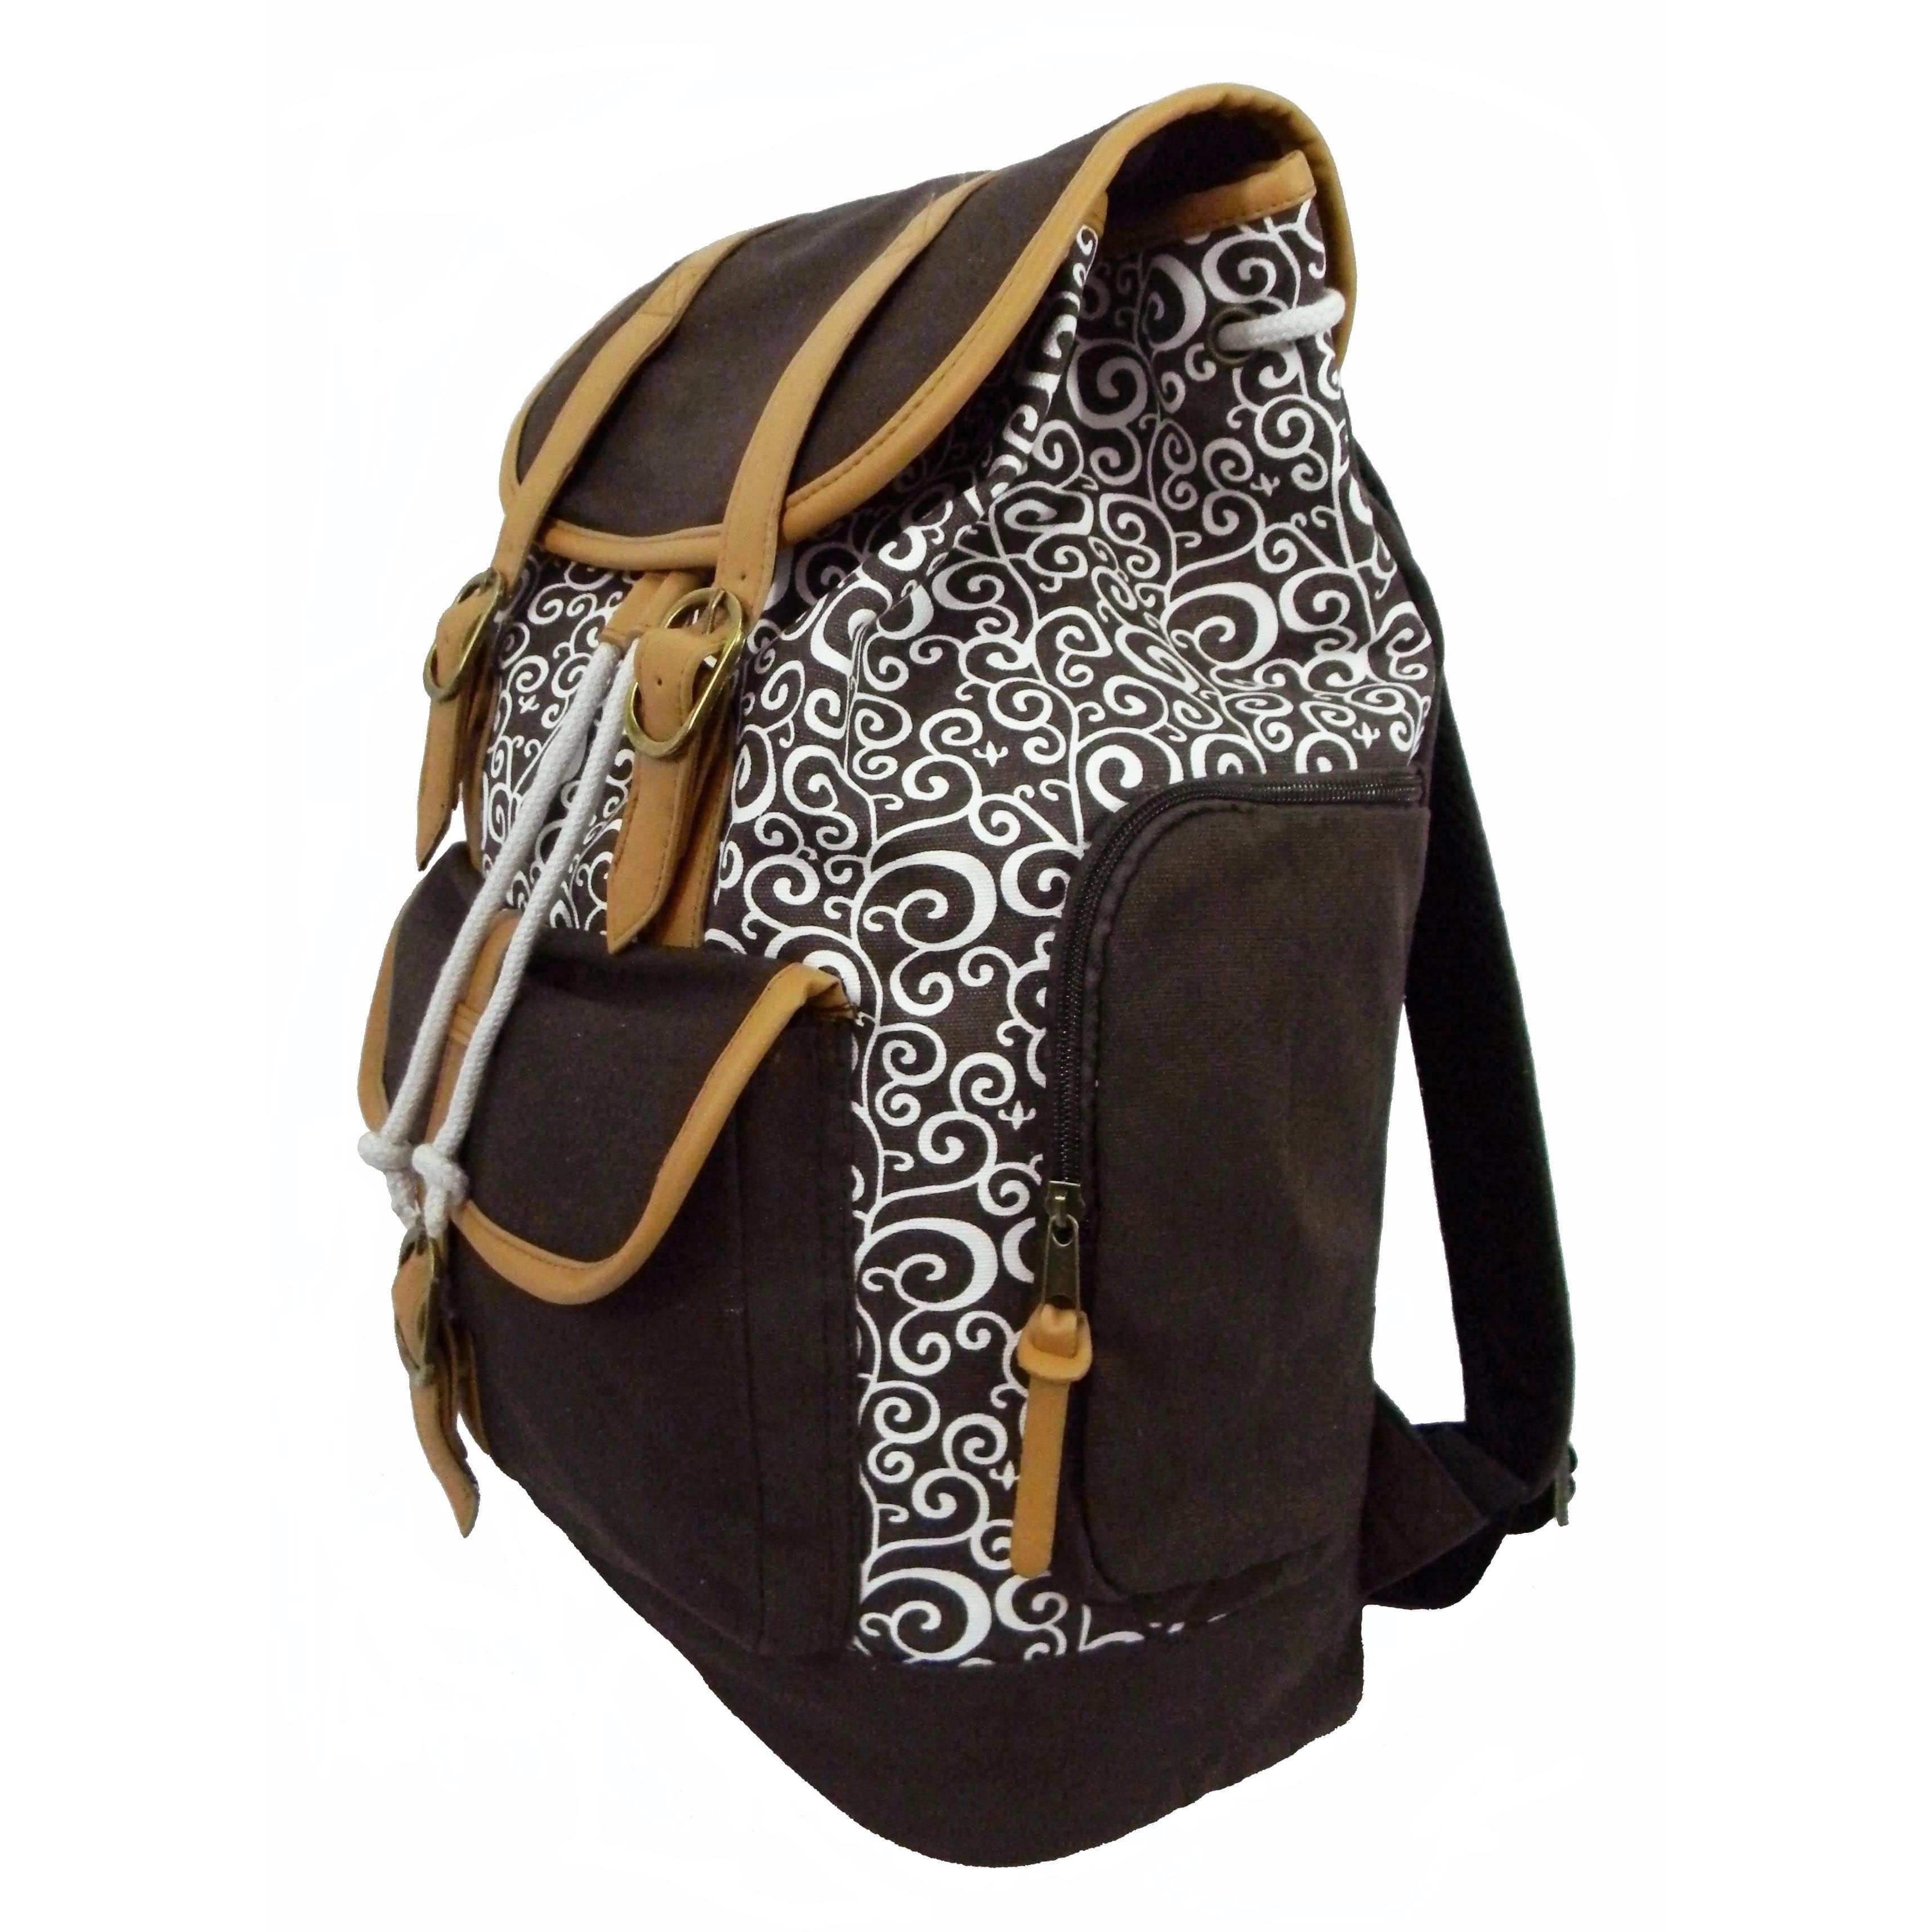 University & More School Liweibao Travel Backpack Mens Bag Backpack Casual Waterproof Canvas Bag Large Capacity Backpack Wear Backpack Computer Bag Outdoor Travel Cloth Bag for Travel 